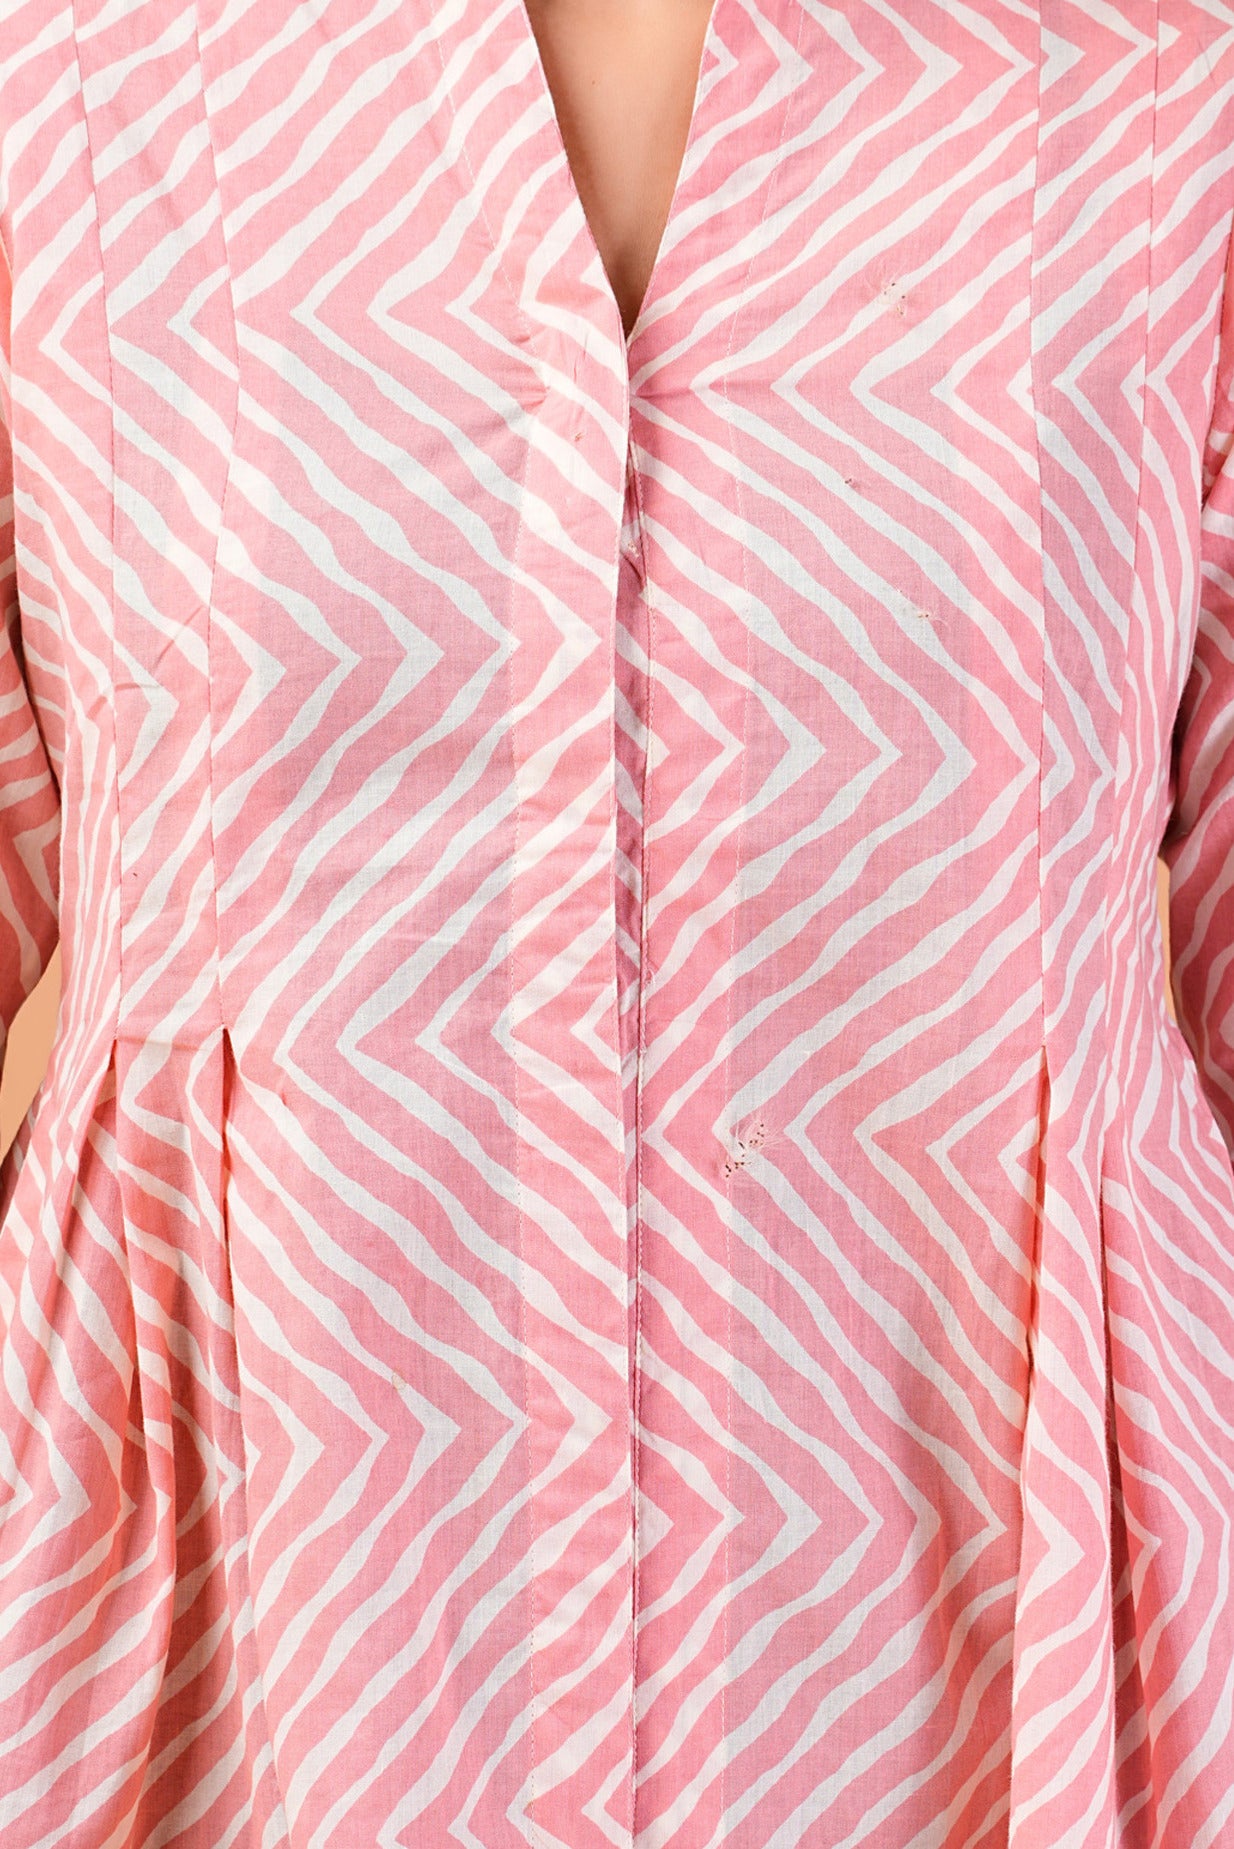 Pastel Pink Zig Zag Printed Cotton Top